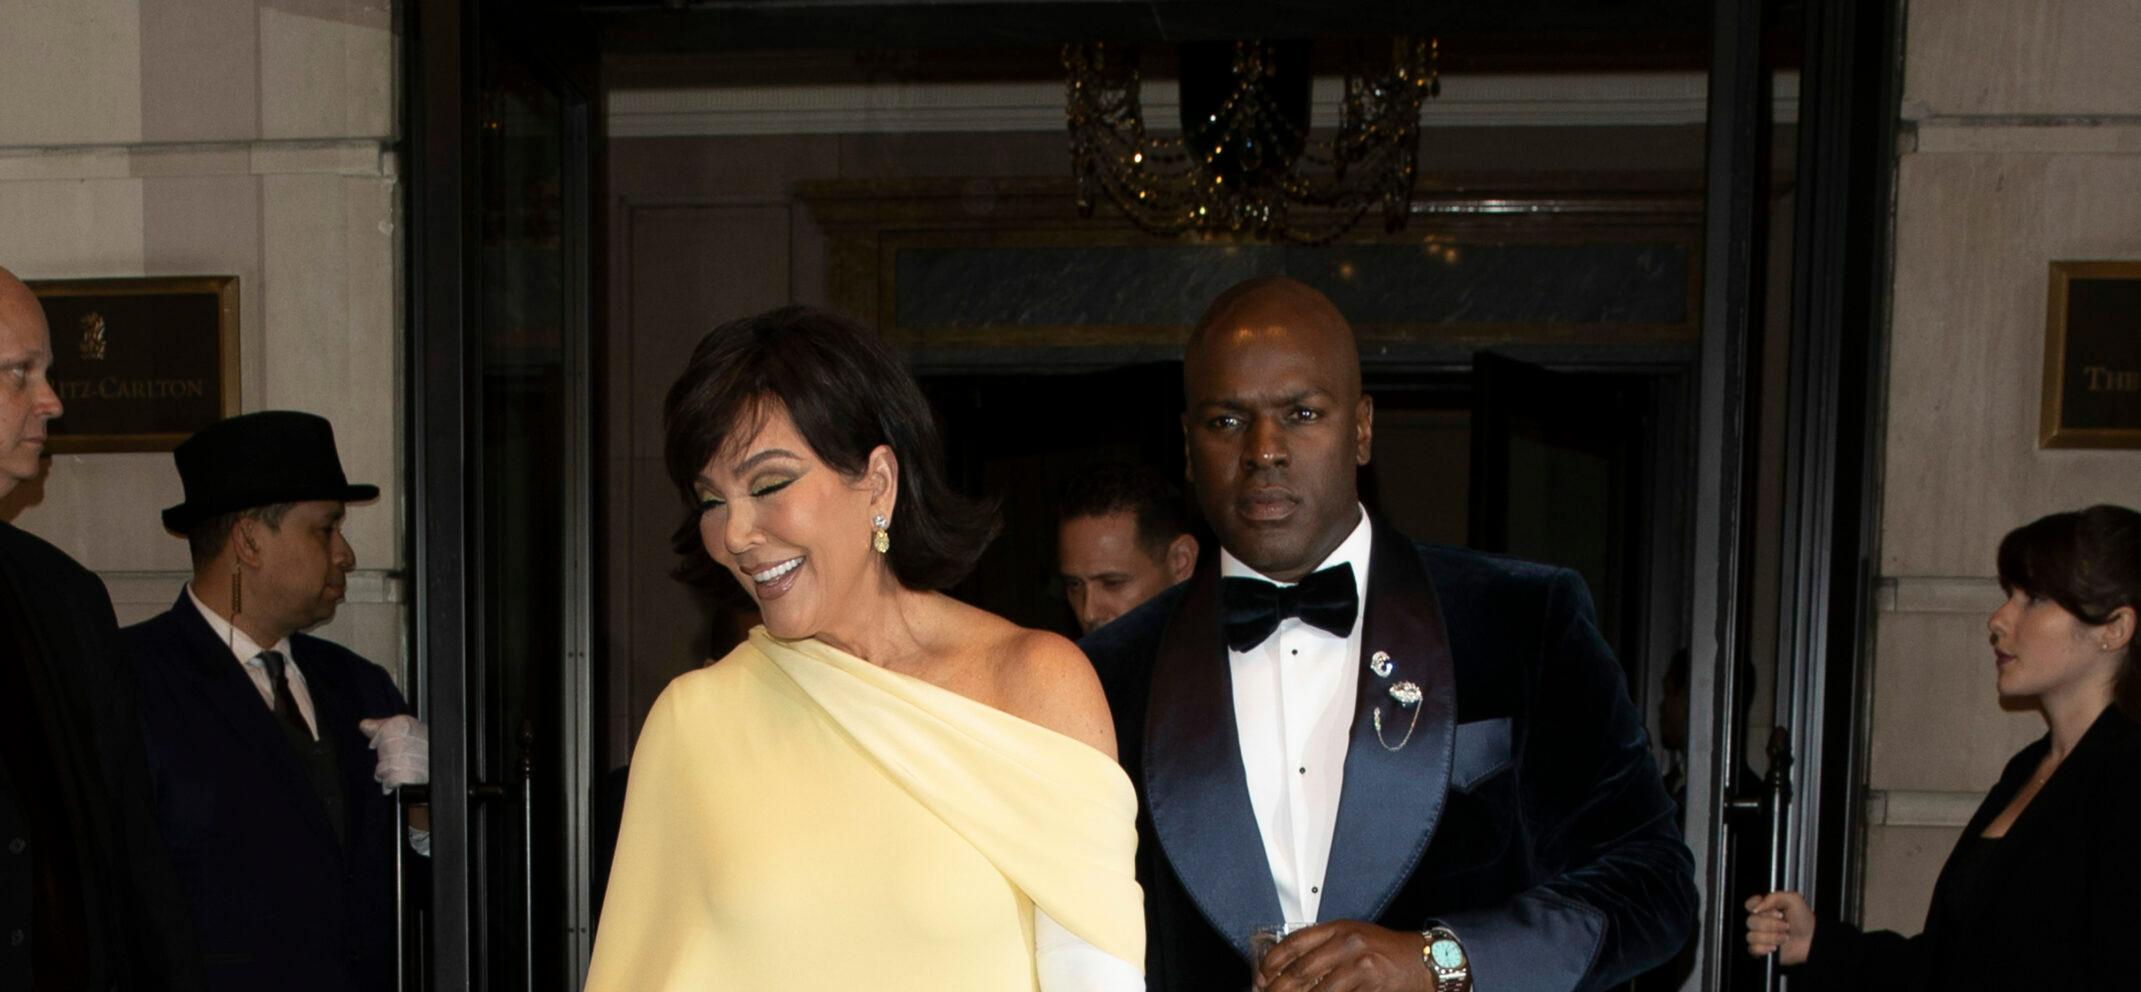 Kris Jenner and Corey Gamble seen leaving dinner the Ritz Carlton Hotel in New York City